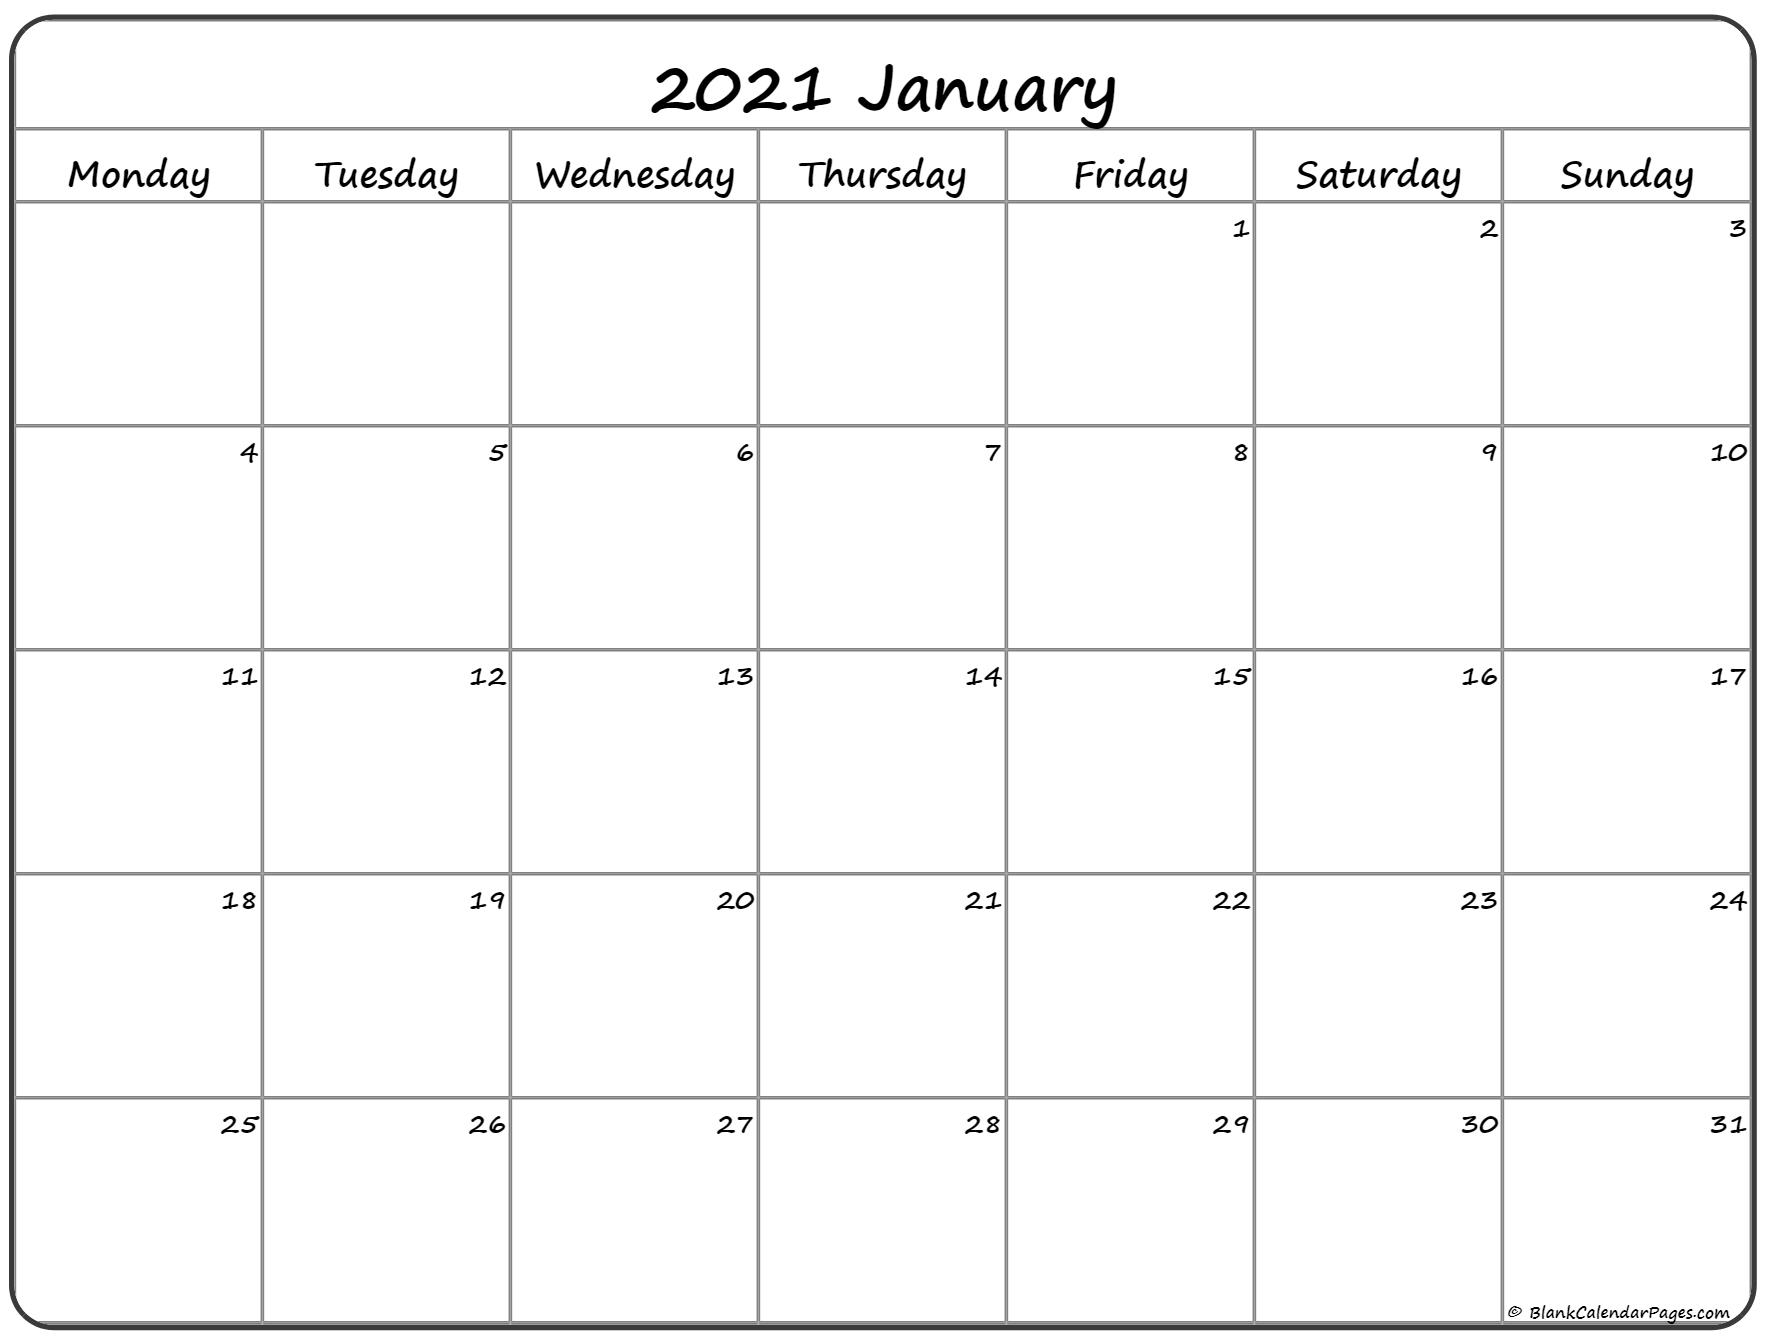 January 2021 Monday Calendar | Monday To Sunday